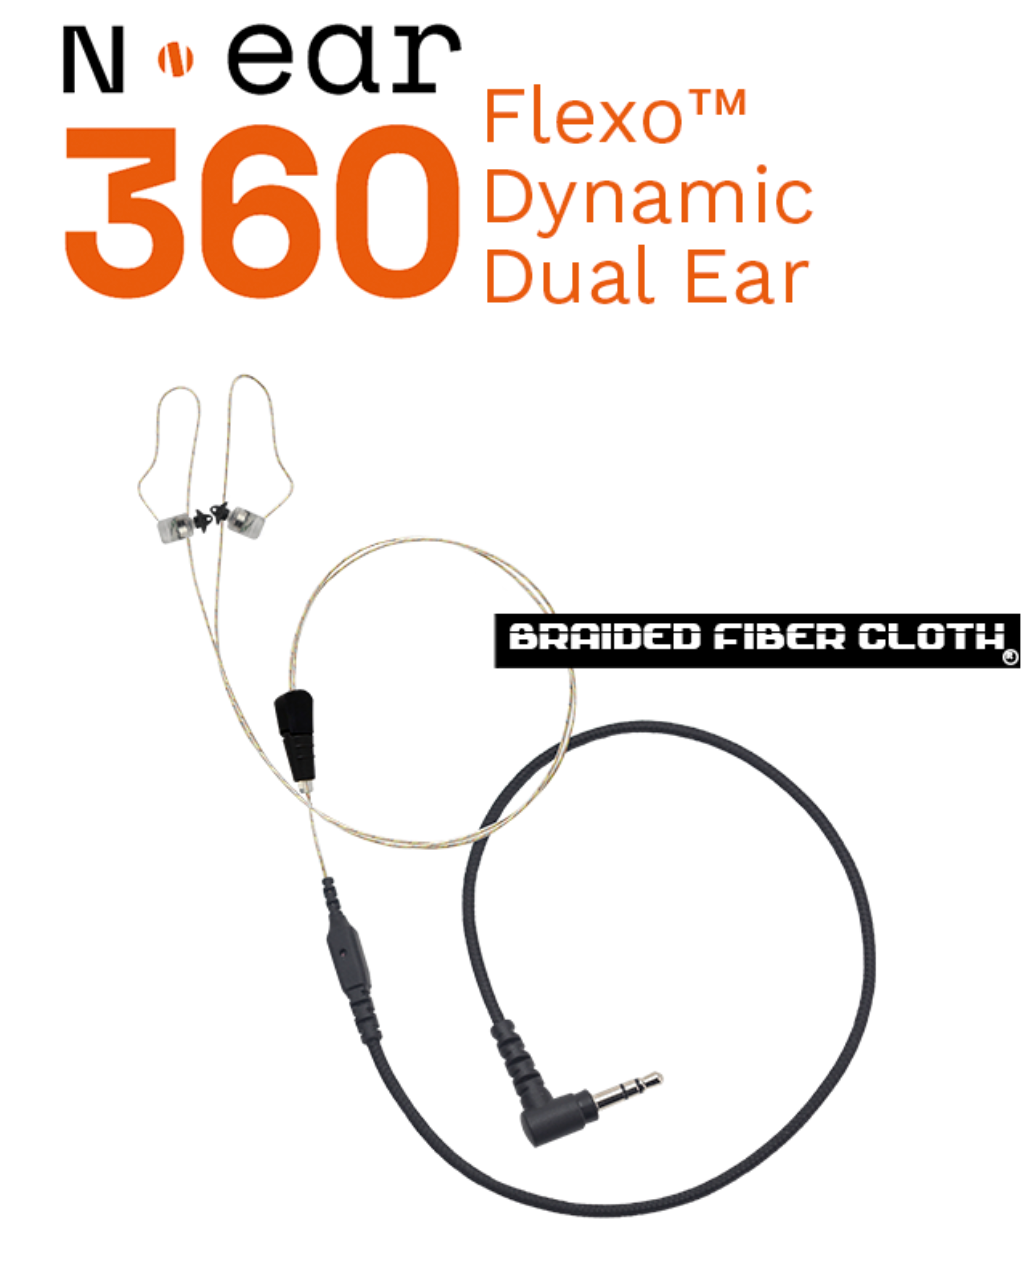 N•EAR 360 FLEXO DYNAMIC™ BRAIDED FIBER CLOTH™ DUAL EAR EARPIECE